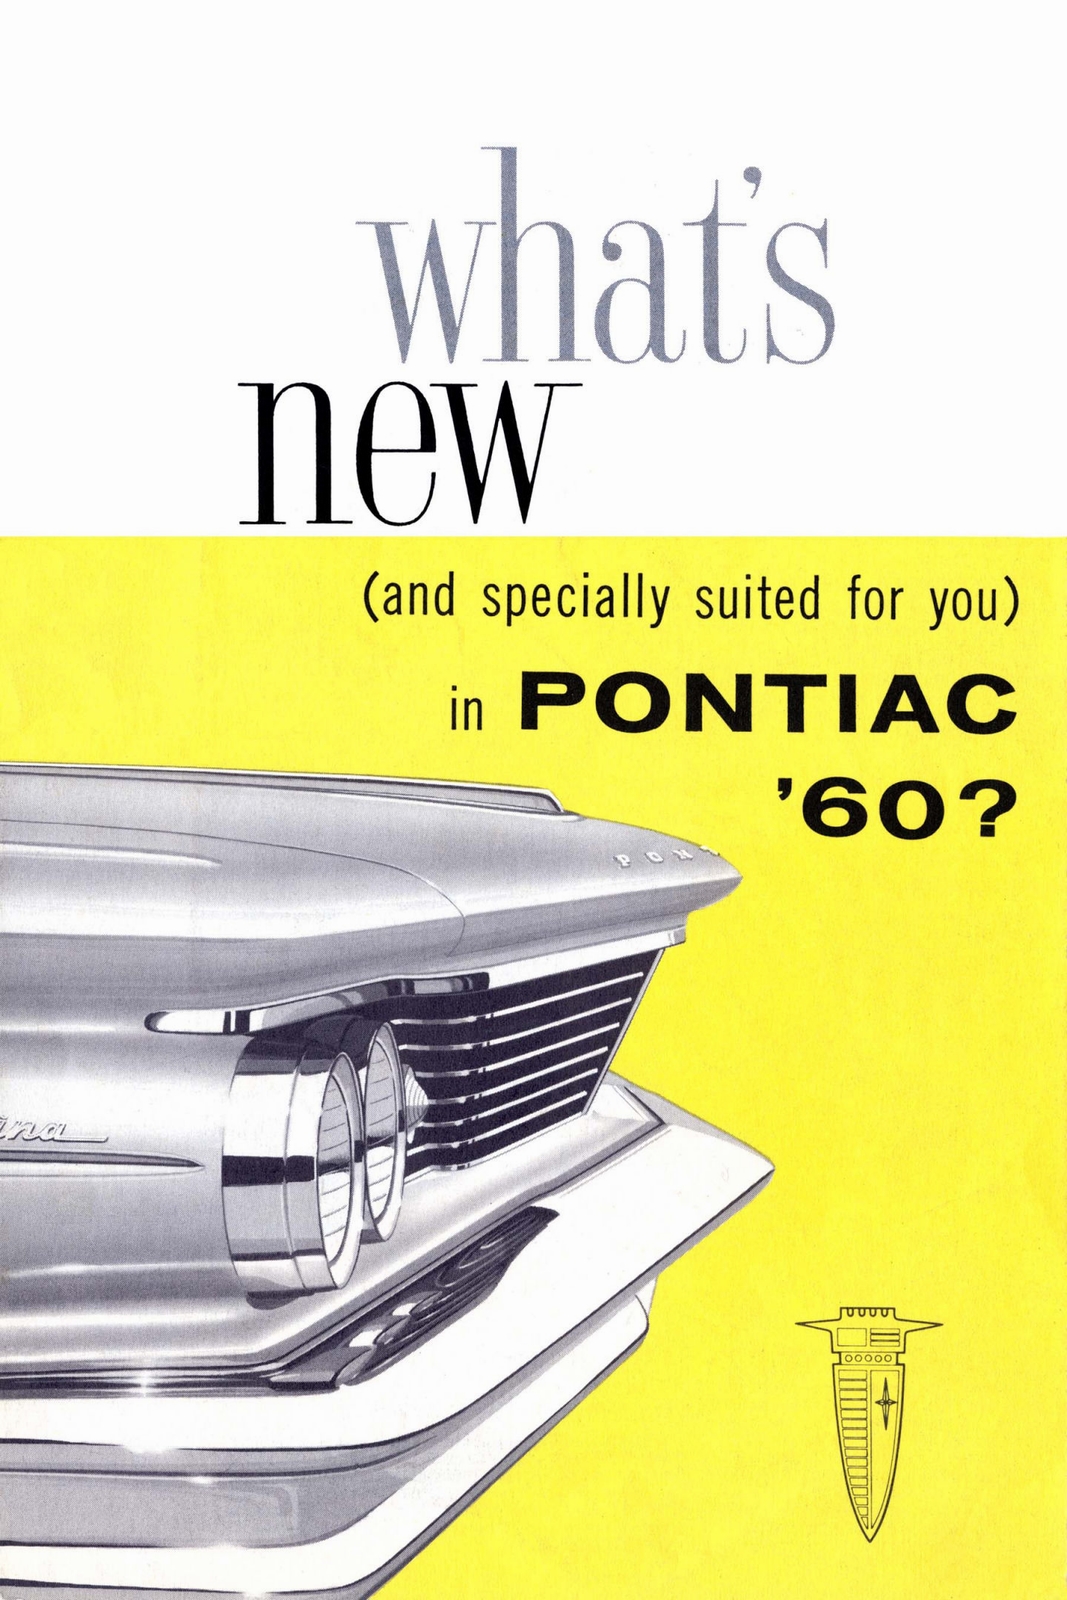 n_1960 Pontiac-Whats New-01.jpg